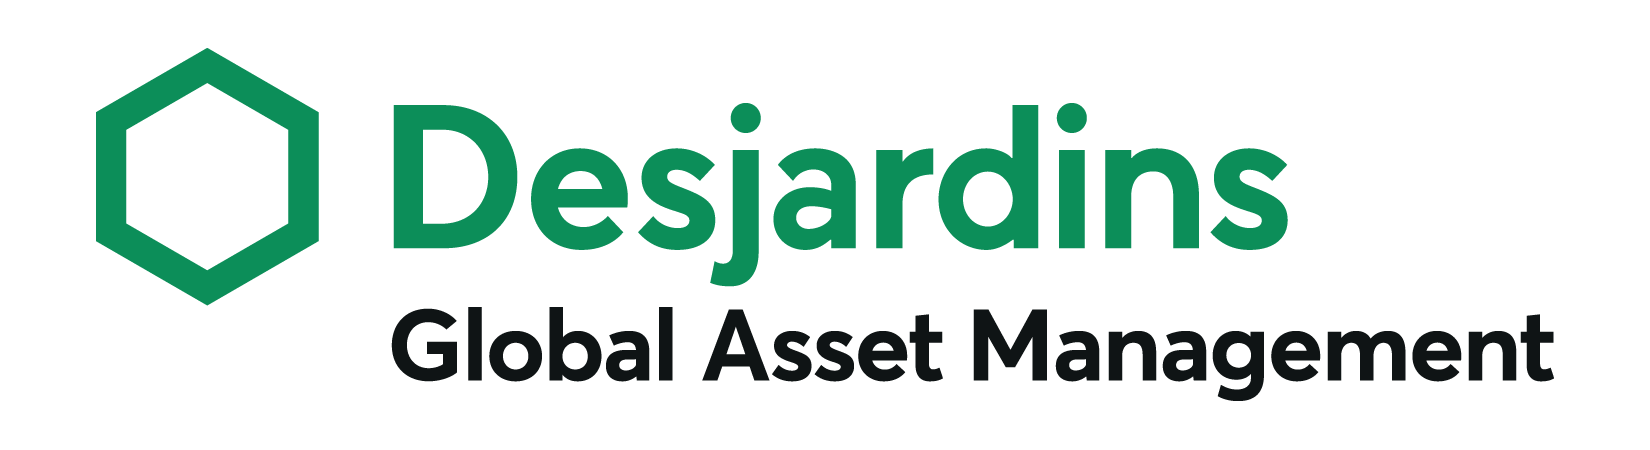 Desjardins Global Asset Management Logo